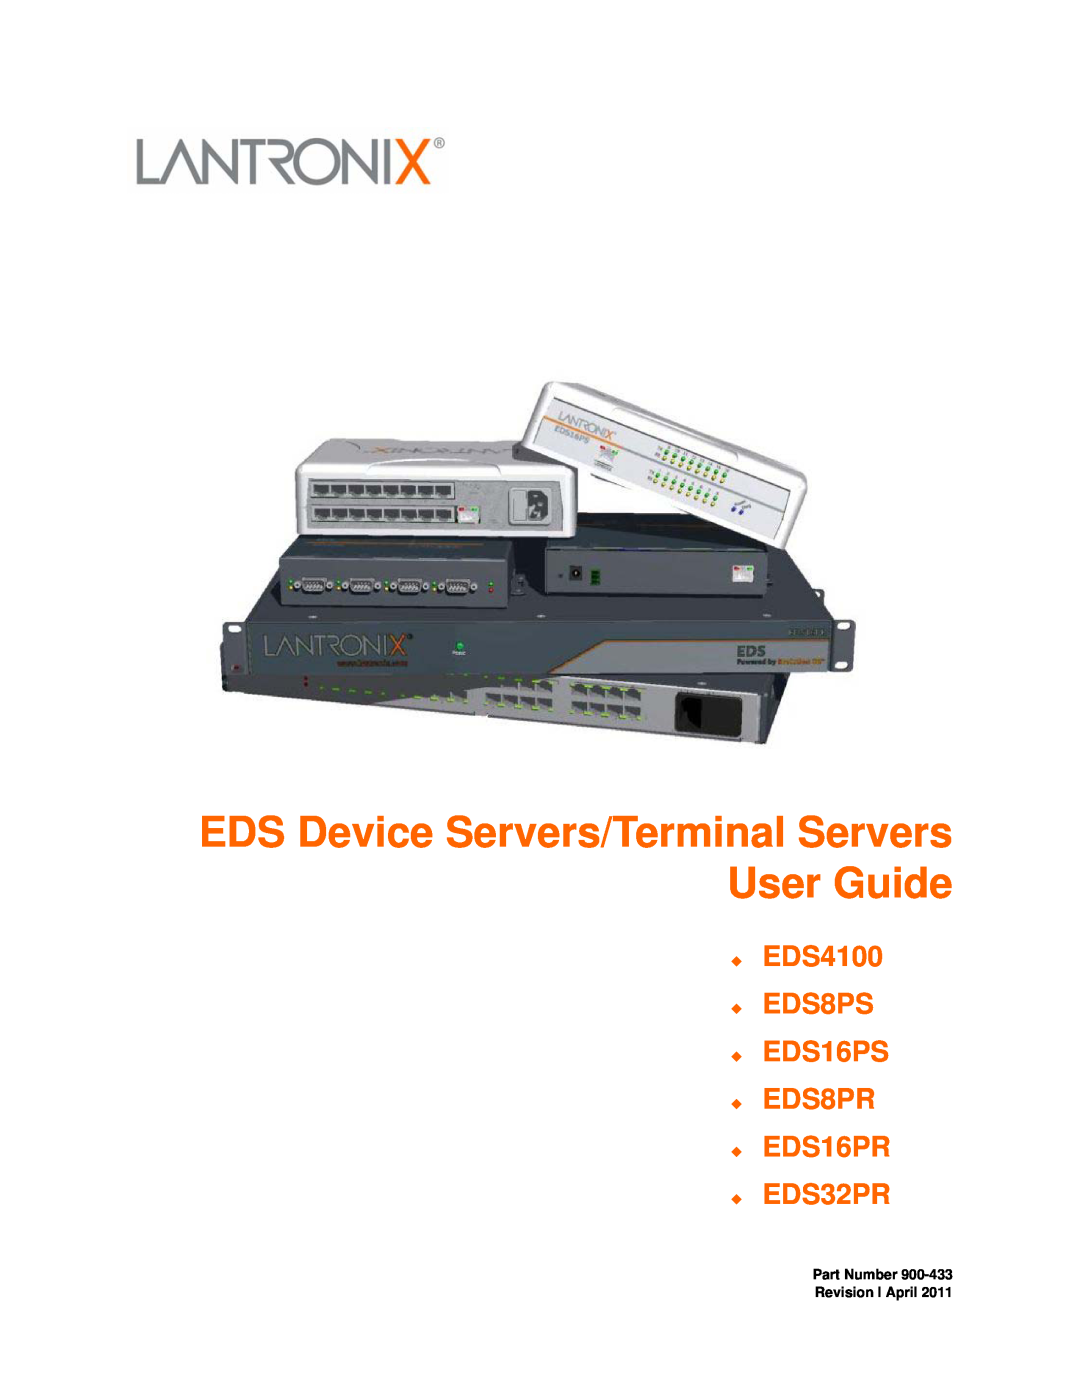 Lantronix EDS16PR, EDS32PR manual EDS Device Servers/Terminal Servers User Guide, Part Number 900-433 Revision I April 